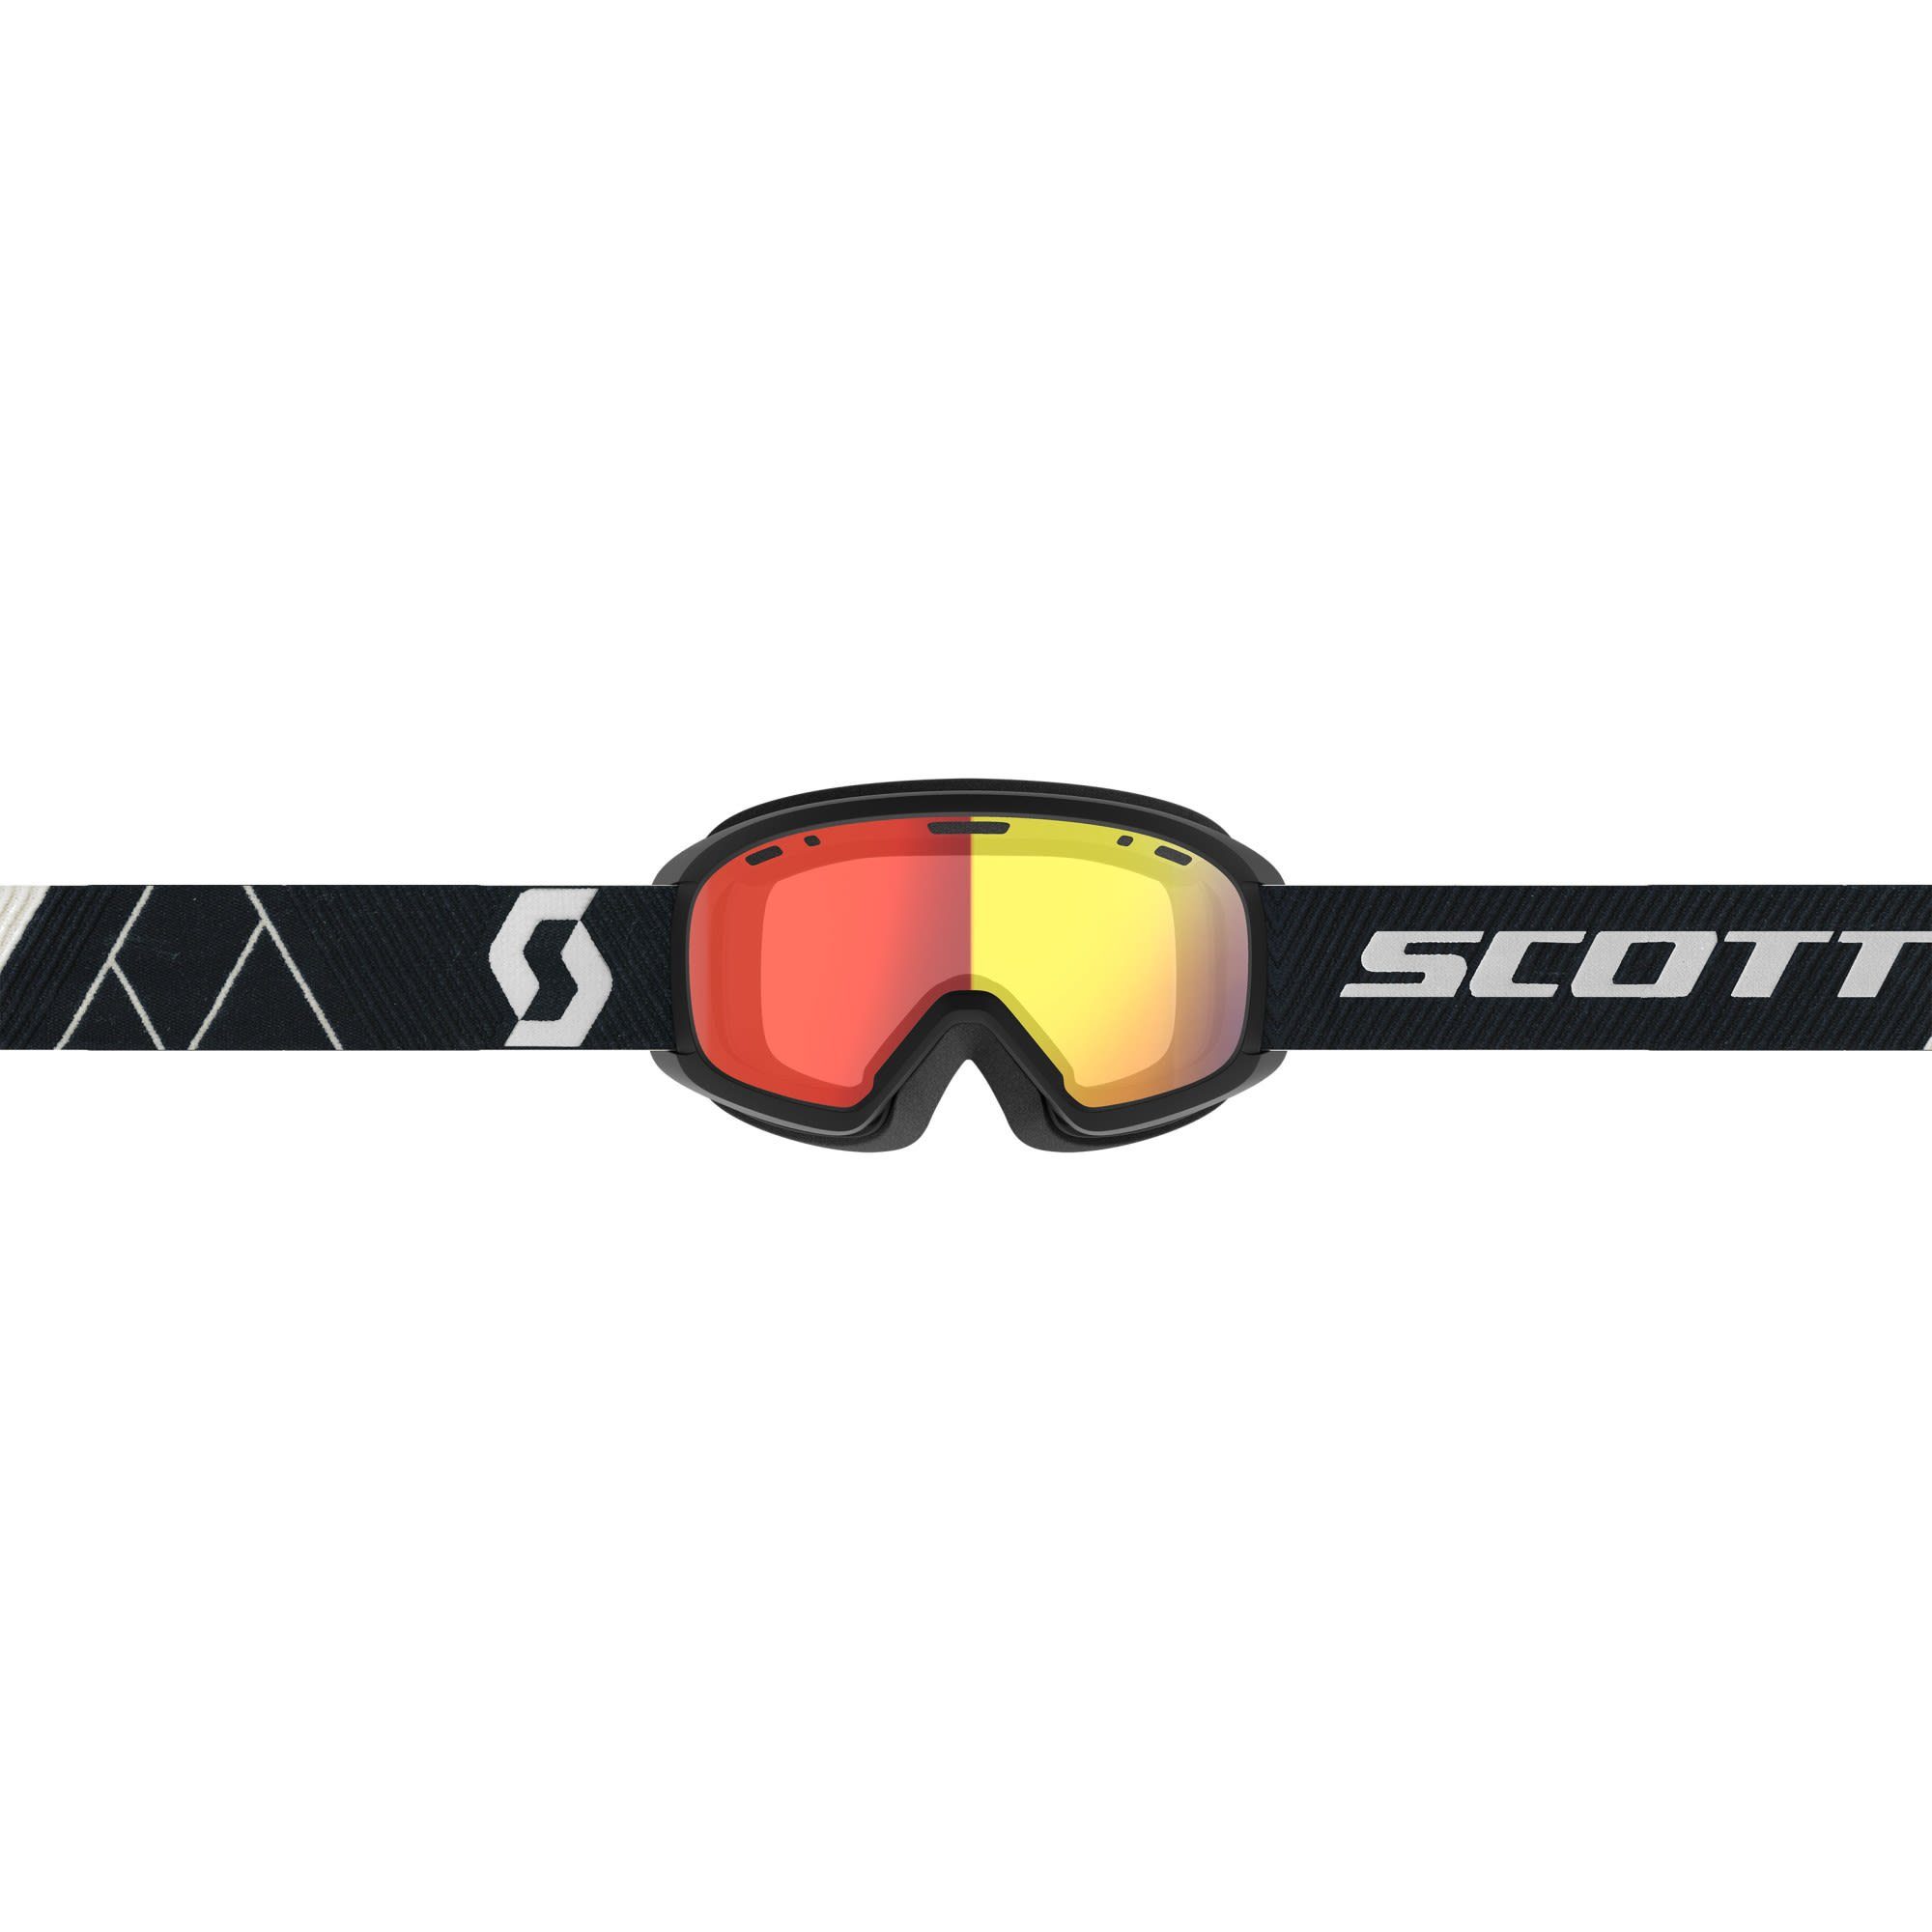 Scott Skibrille - Chrome Witty Red Scott Black Kinder Chrome Junior Blue Enhancer Goggle